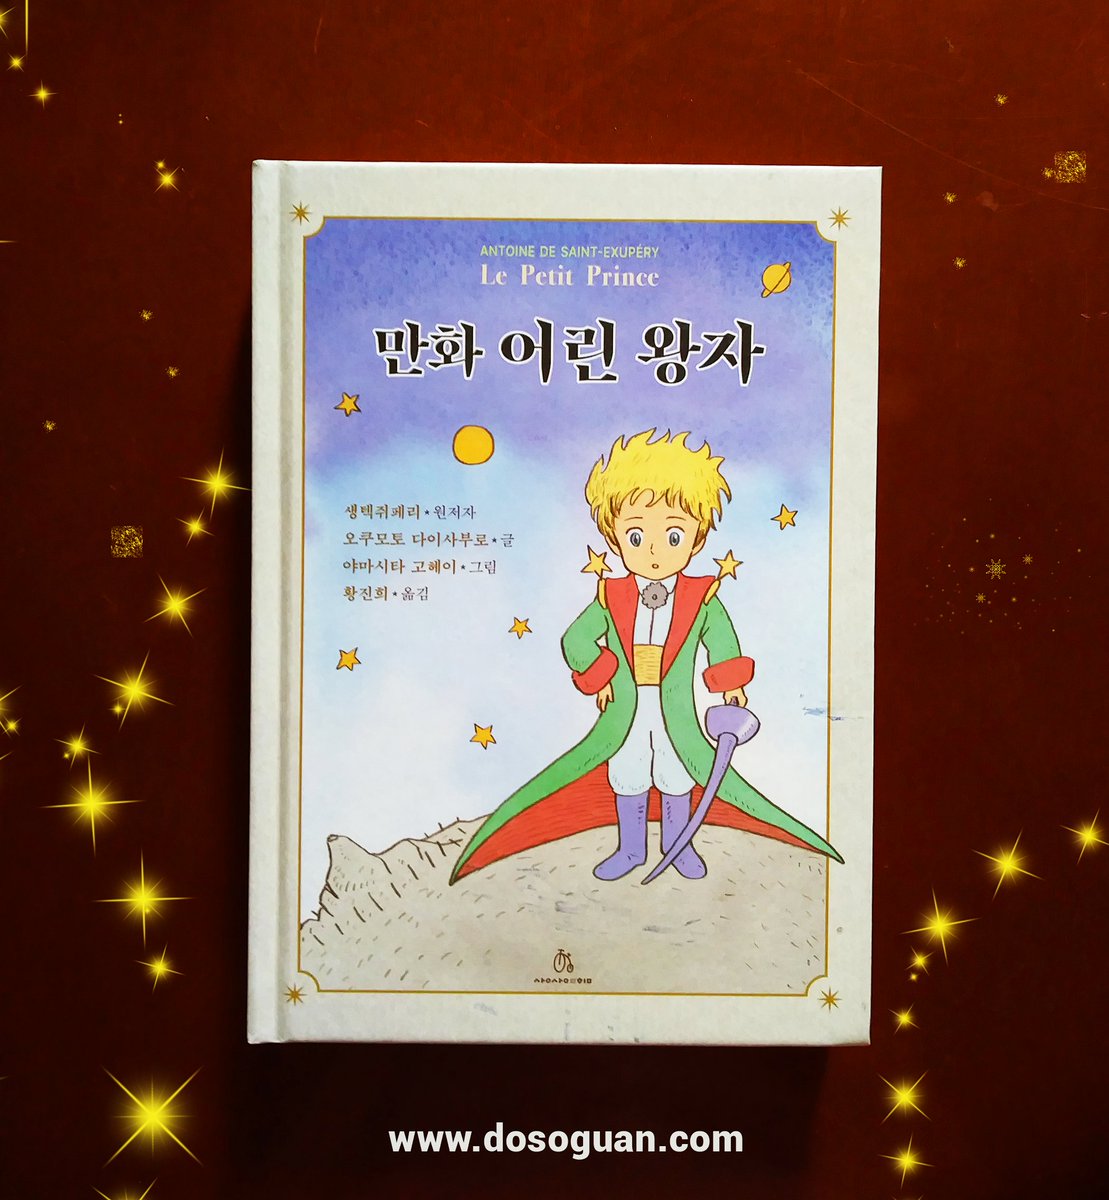 #Leggere in #Coreano a #Fumetti 💬🦊 #StudyKorean in a Creative Way *💖 ->  shorturl.at/wEQUX  #lingue #leggere #linguacoreana #coreadelsud #ilpiccoloprincipe #thelittleprince